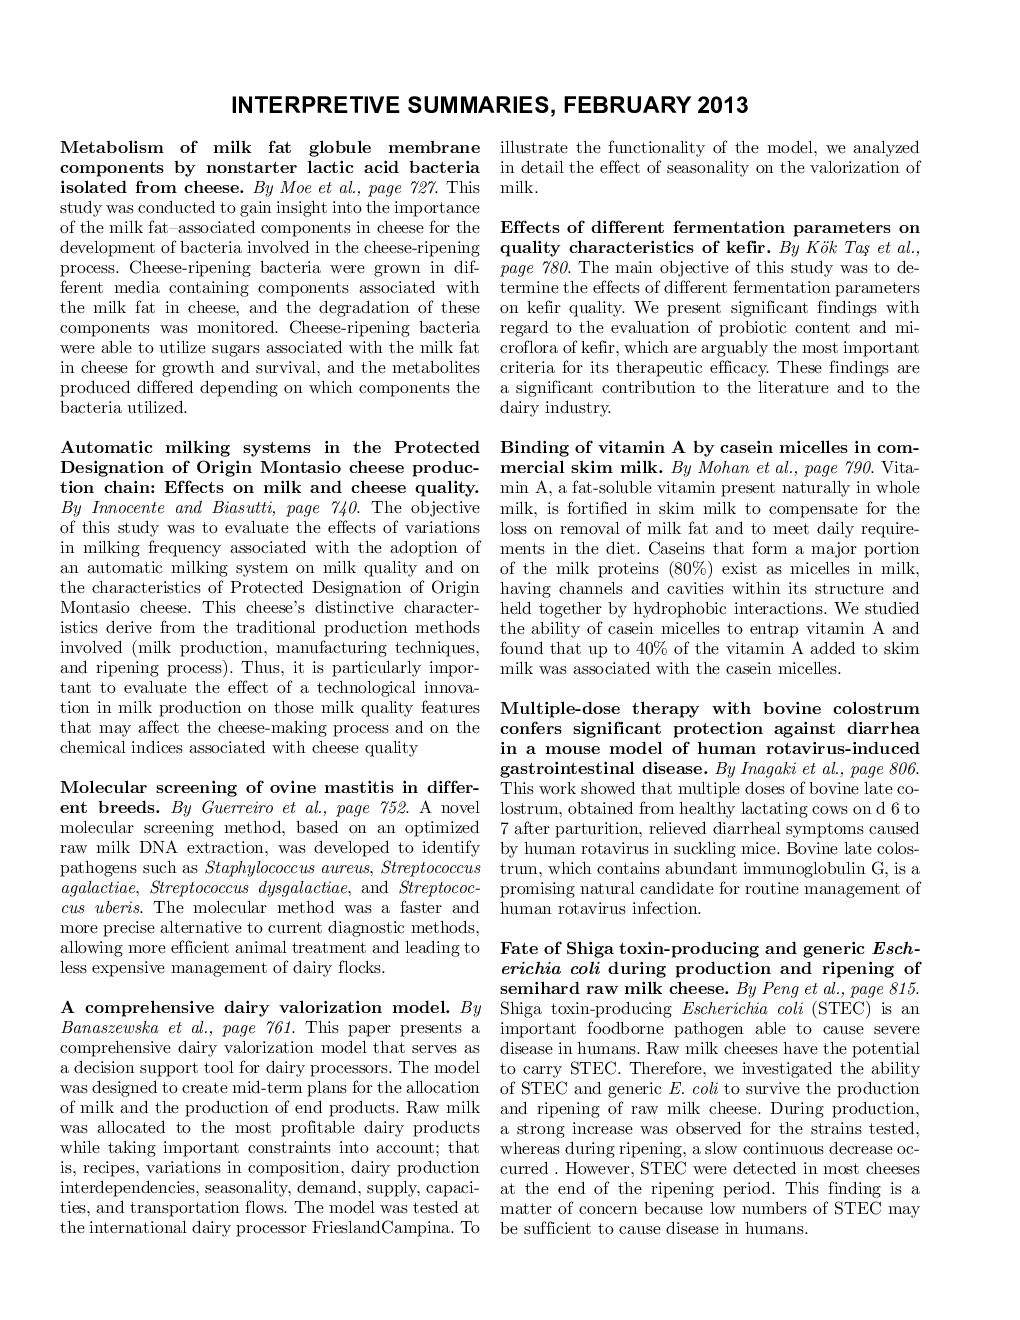 Interpretive summaries, February 2013